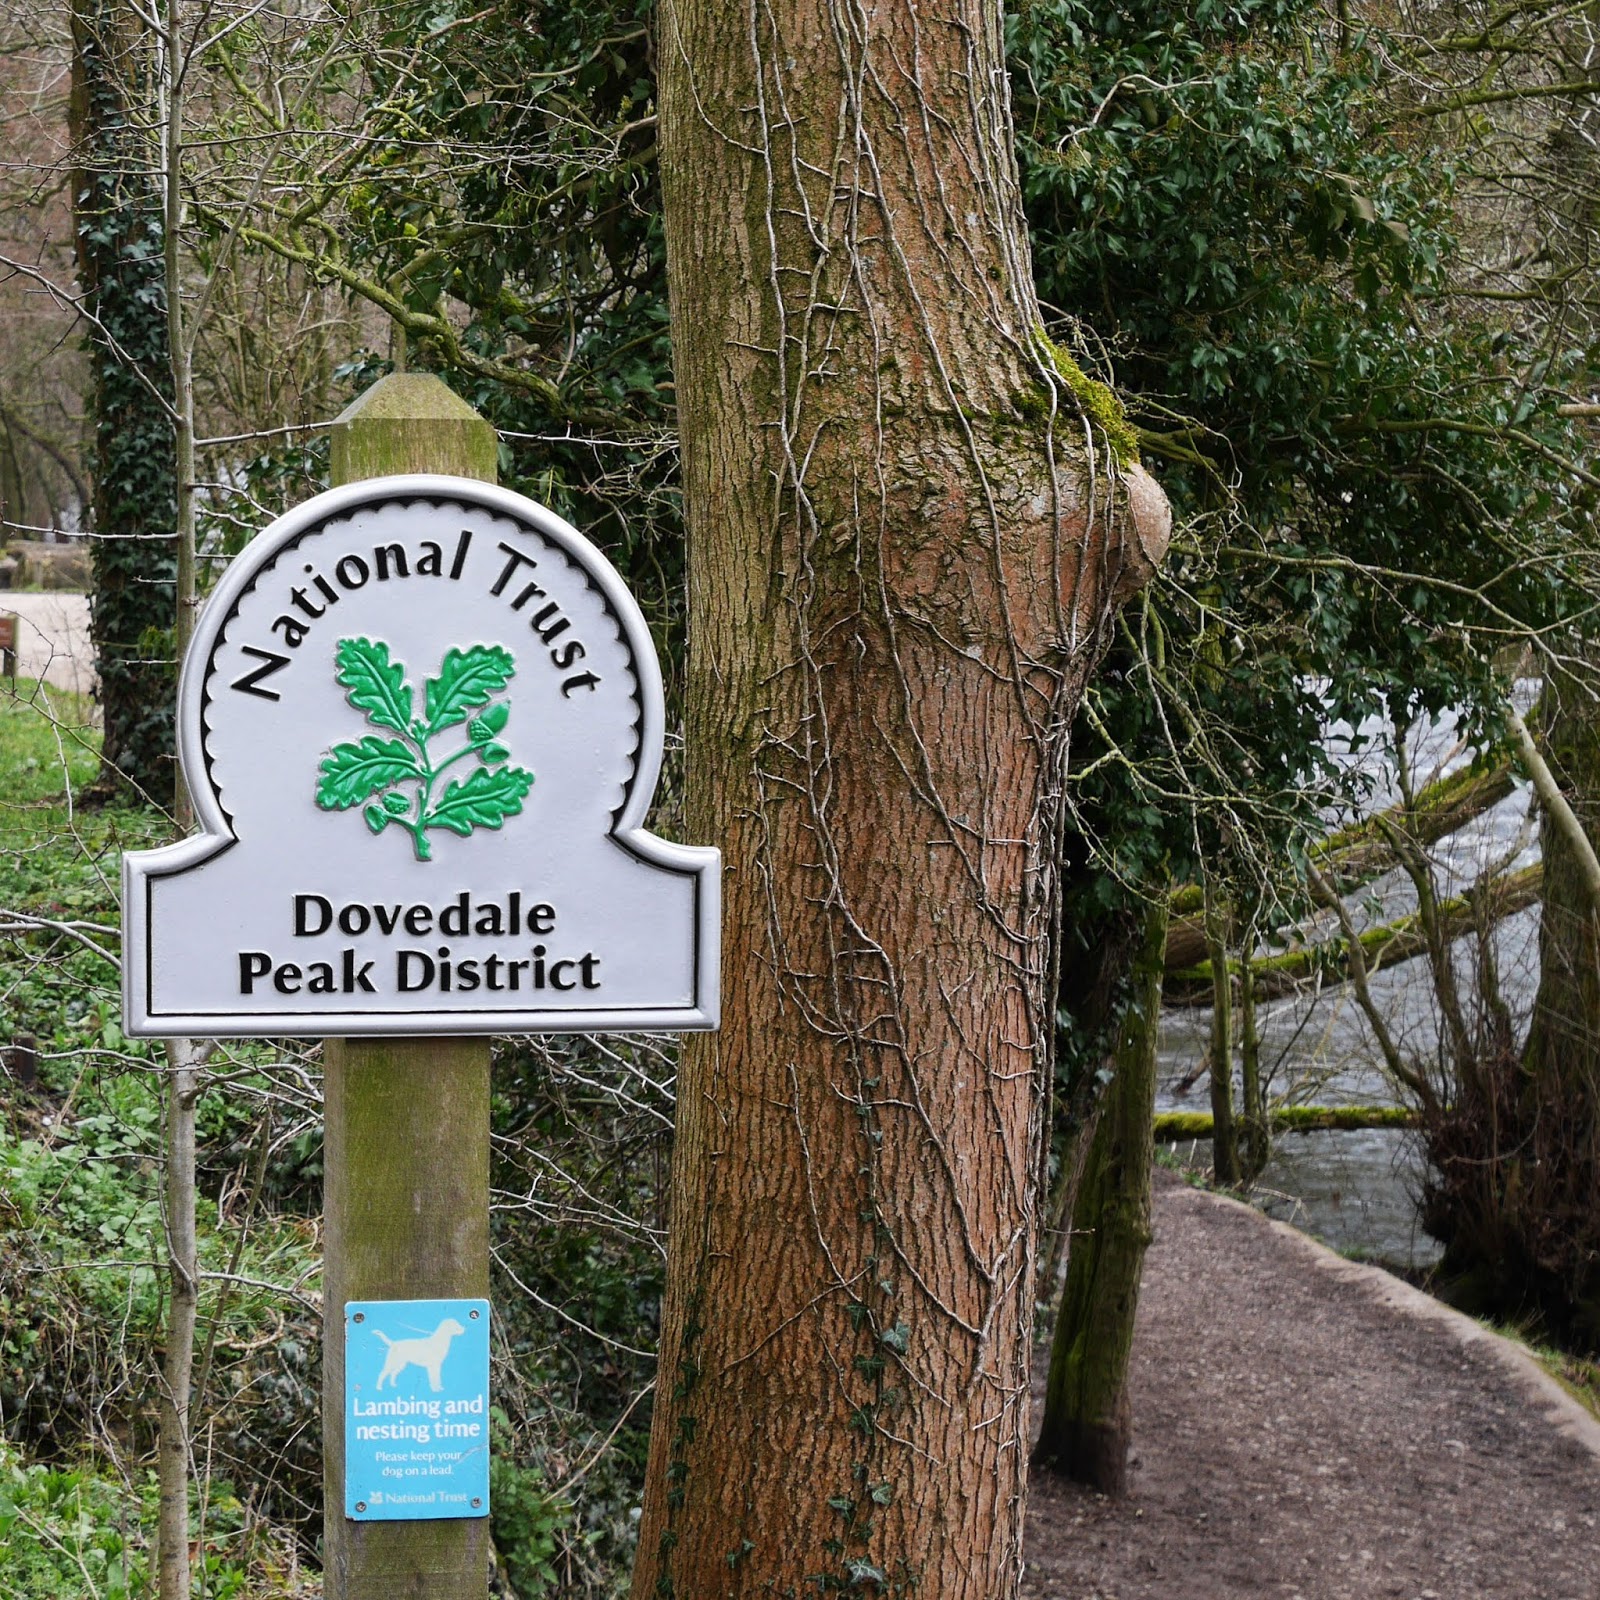 Dovedale National Trust site, Peak District National Park